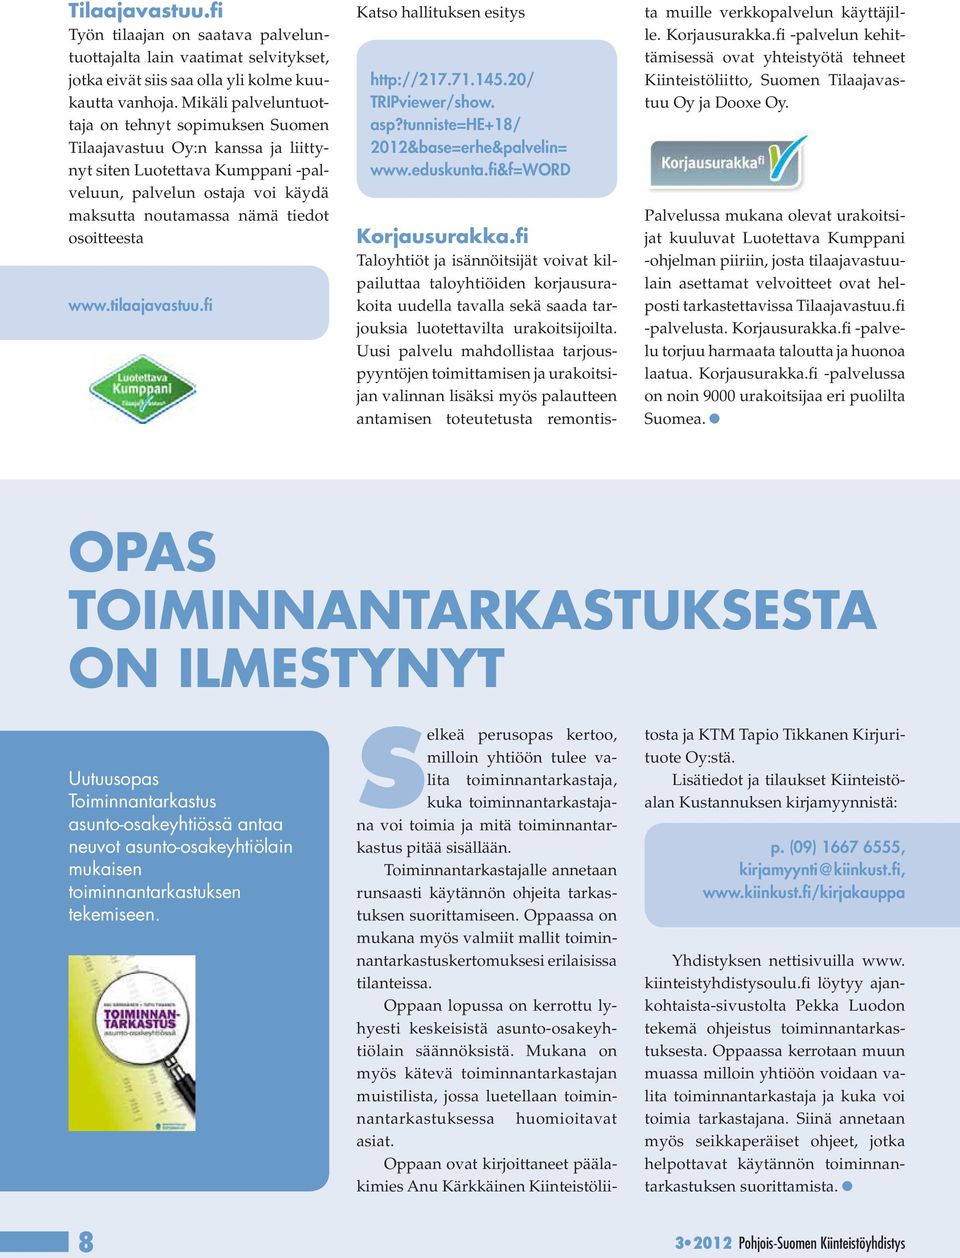 www.tilaajavastuu.fi Katso hallituksen esitys http://217.71.145.20/ TRIPviewer/show. asp?tunniste=he+18/ 2012&base=erhe&palvelin= www.eduskunta.fi&f=word Korjausurakka.